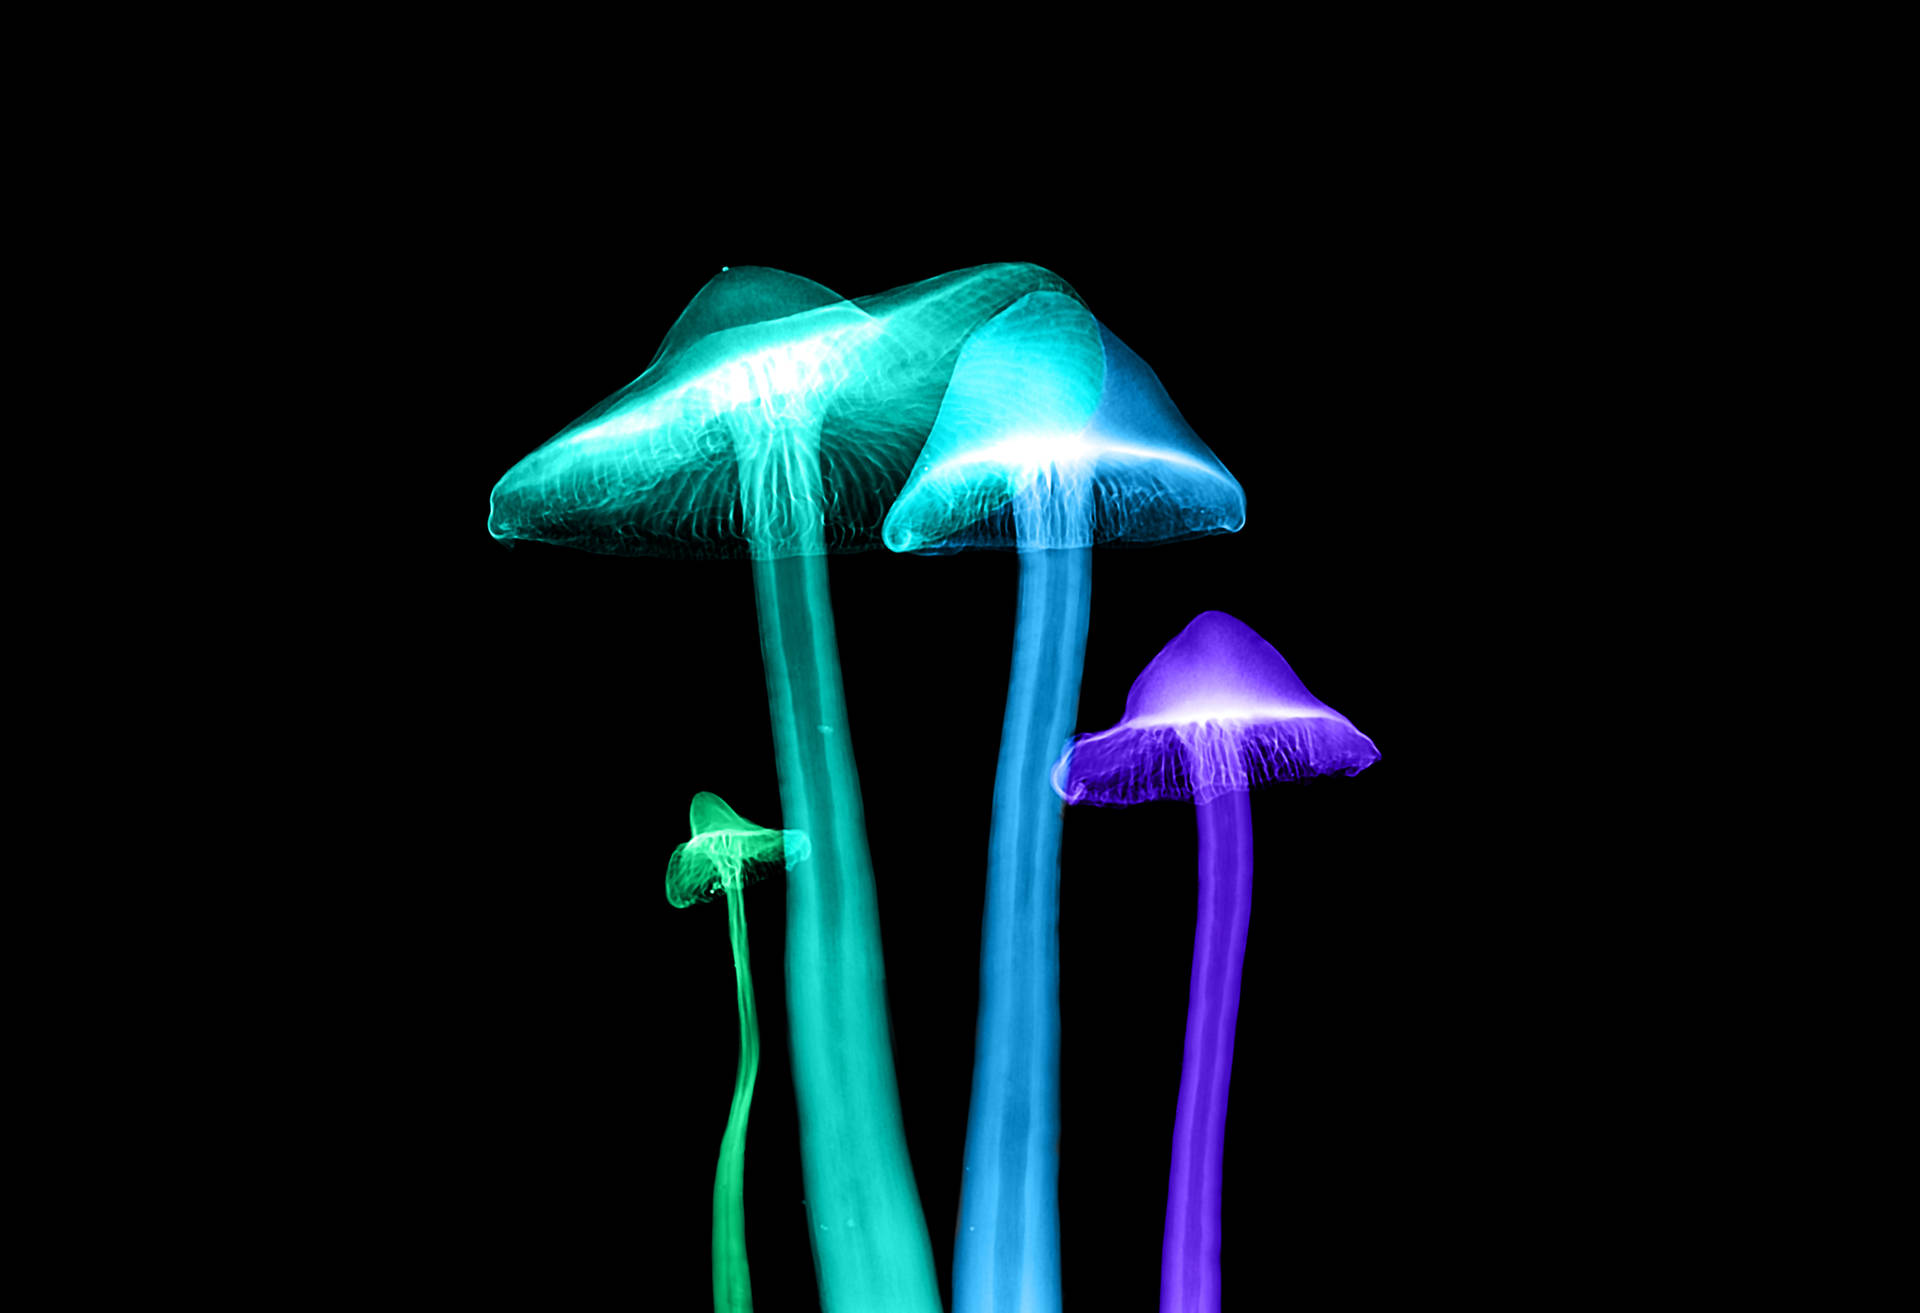 A Beautiful Display Of Glowing Mushroom Lights. Background